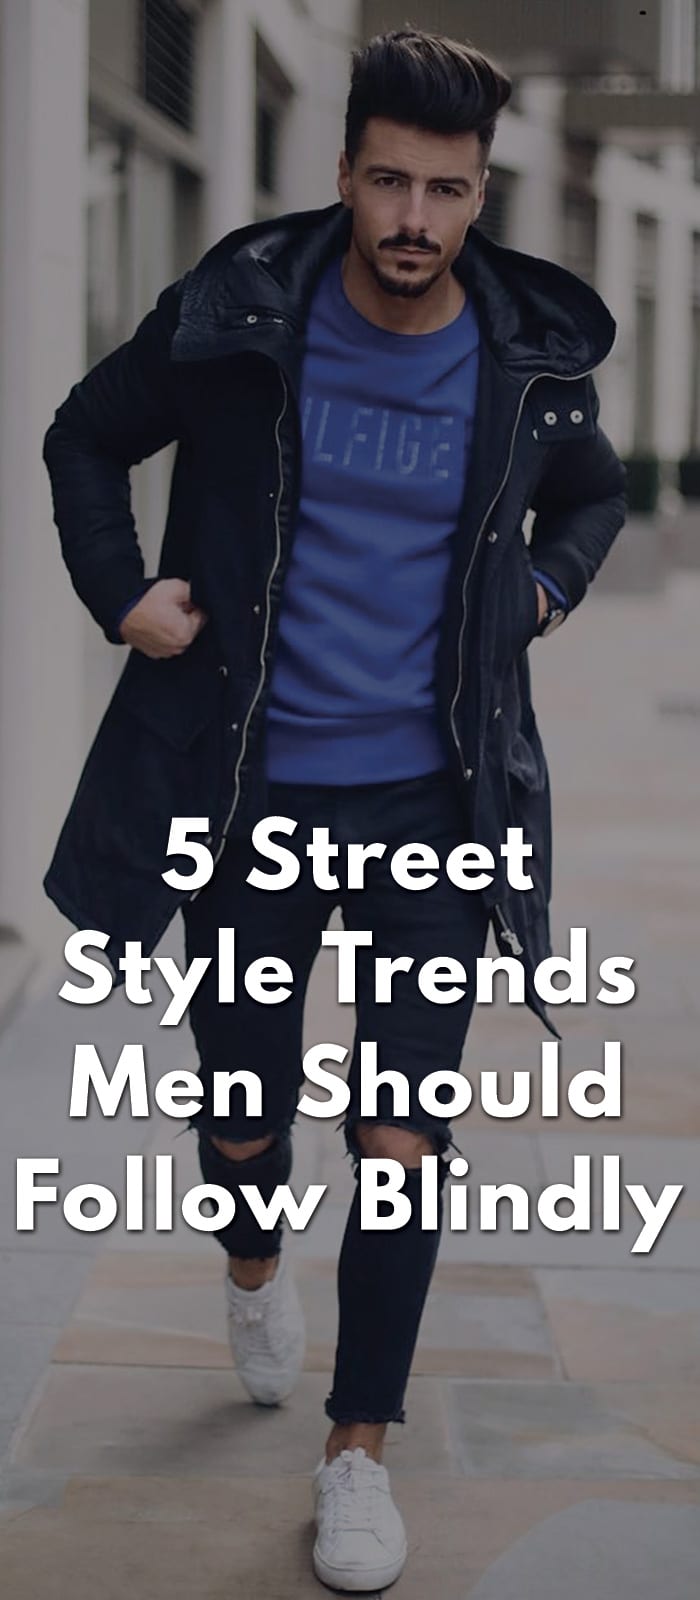 5 Street Style Trends Men Should Follow Blindly